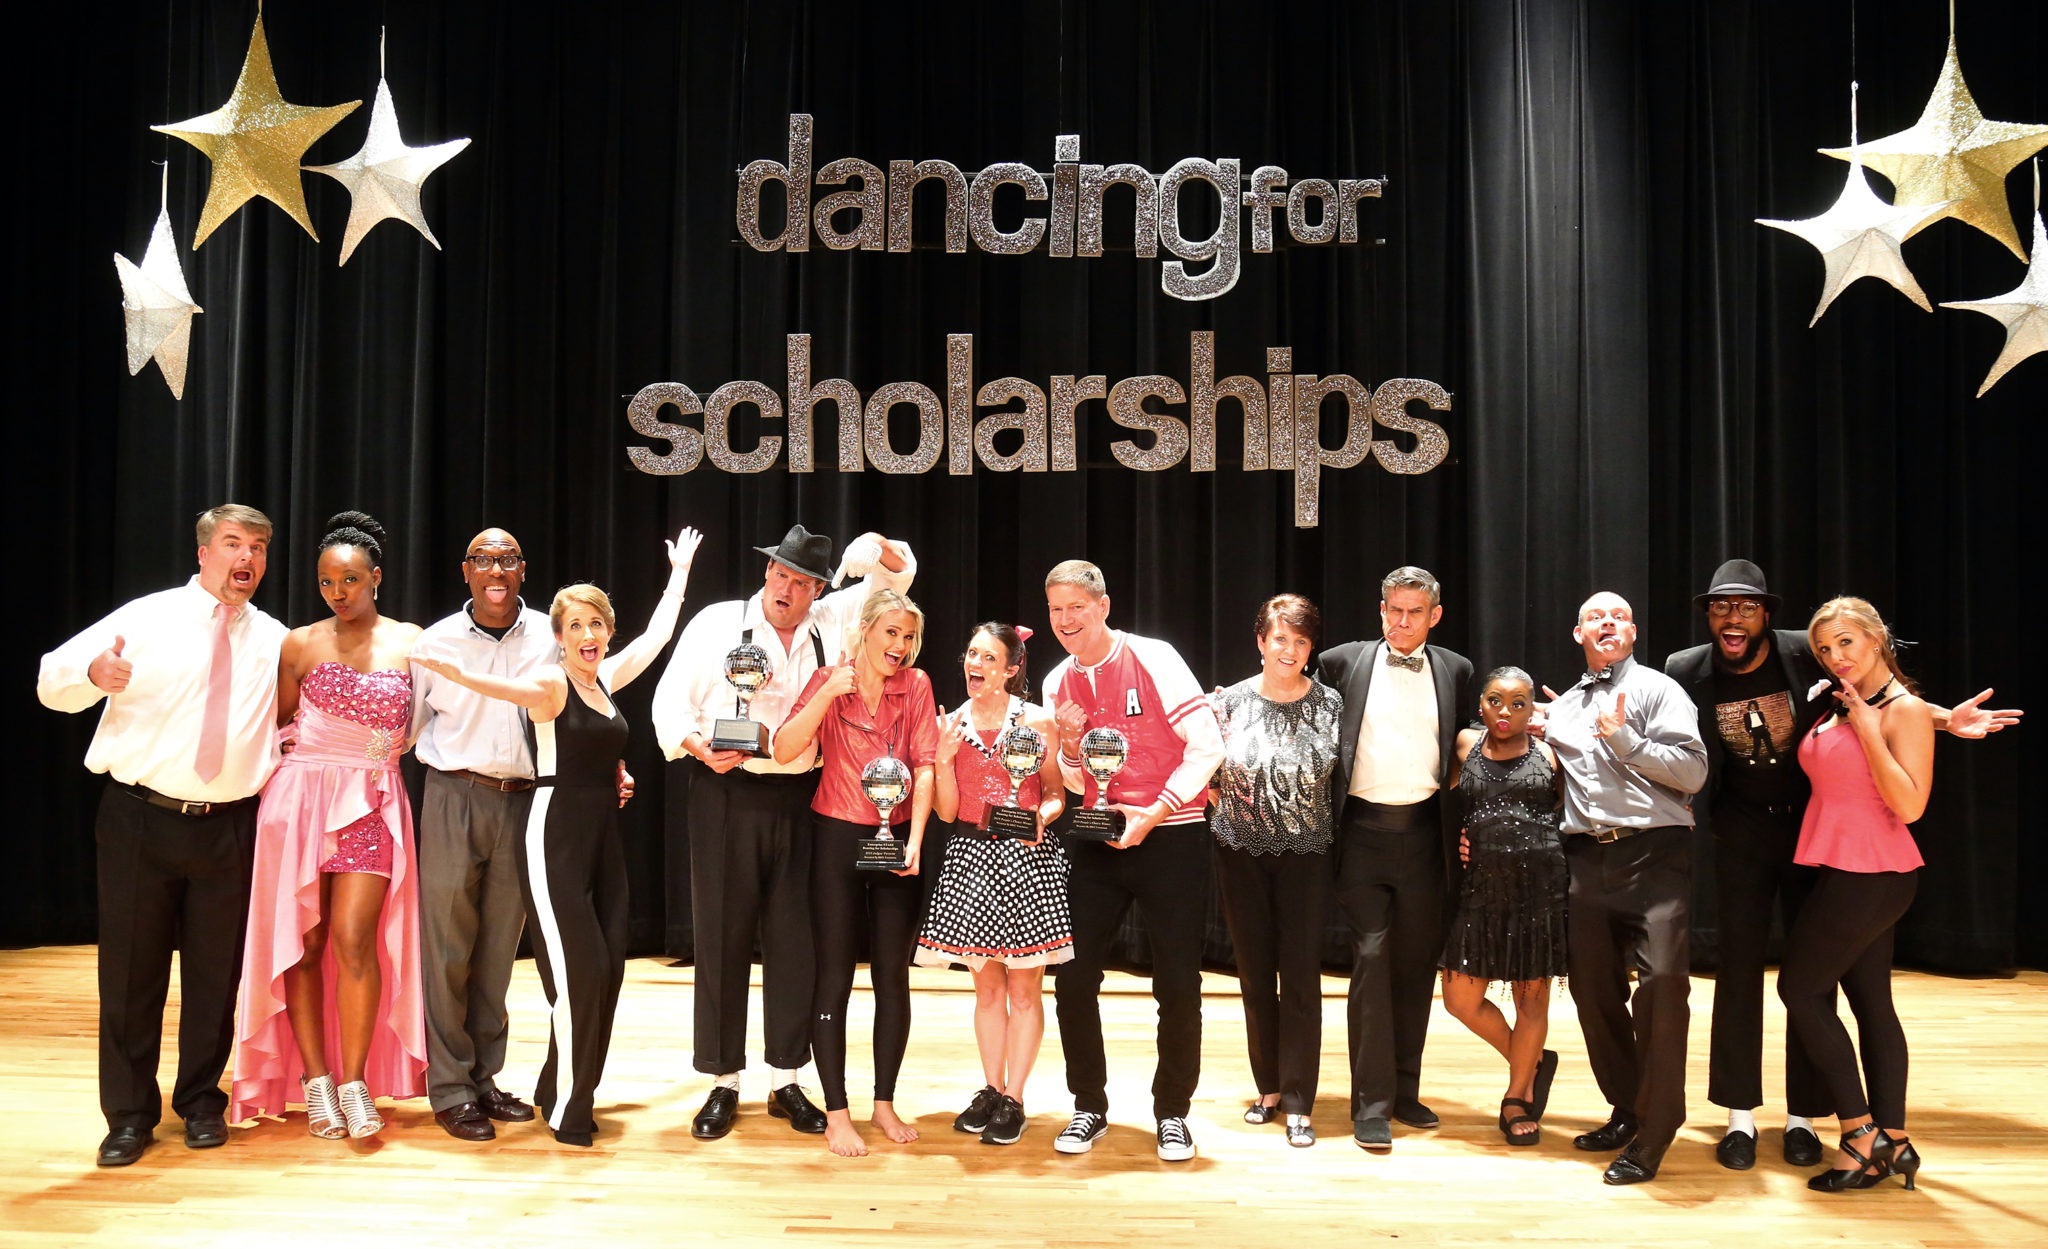 “Dancing for Scholarships” raises over $20,000